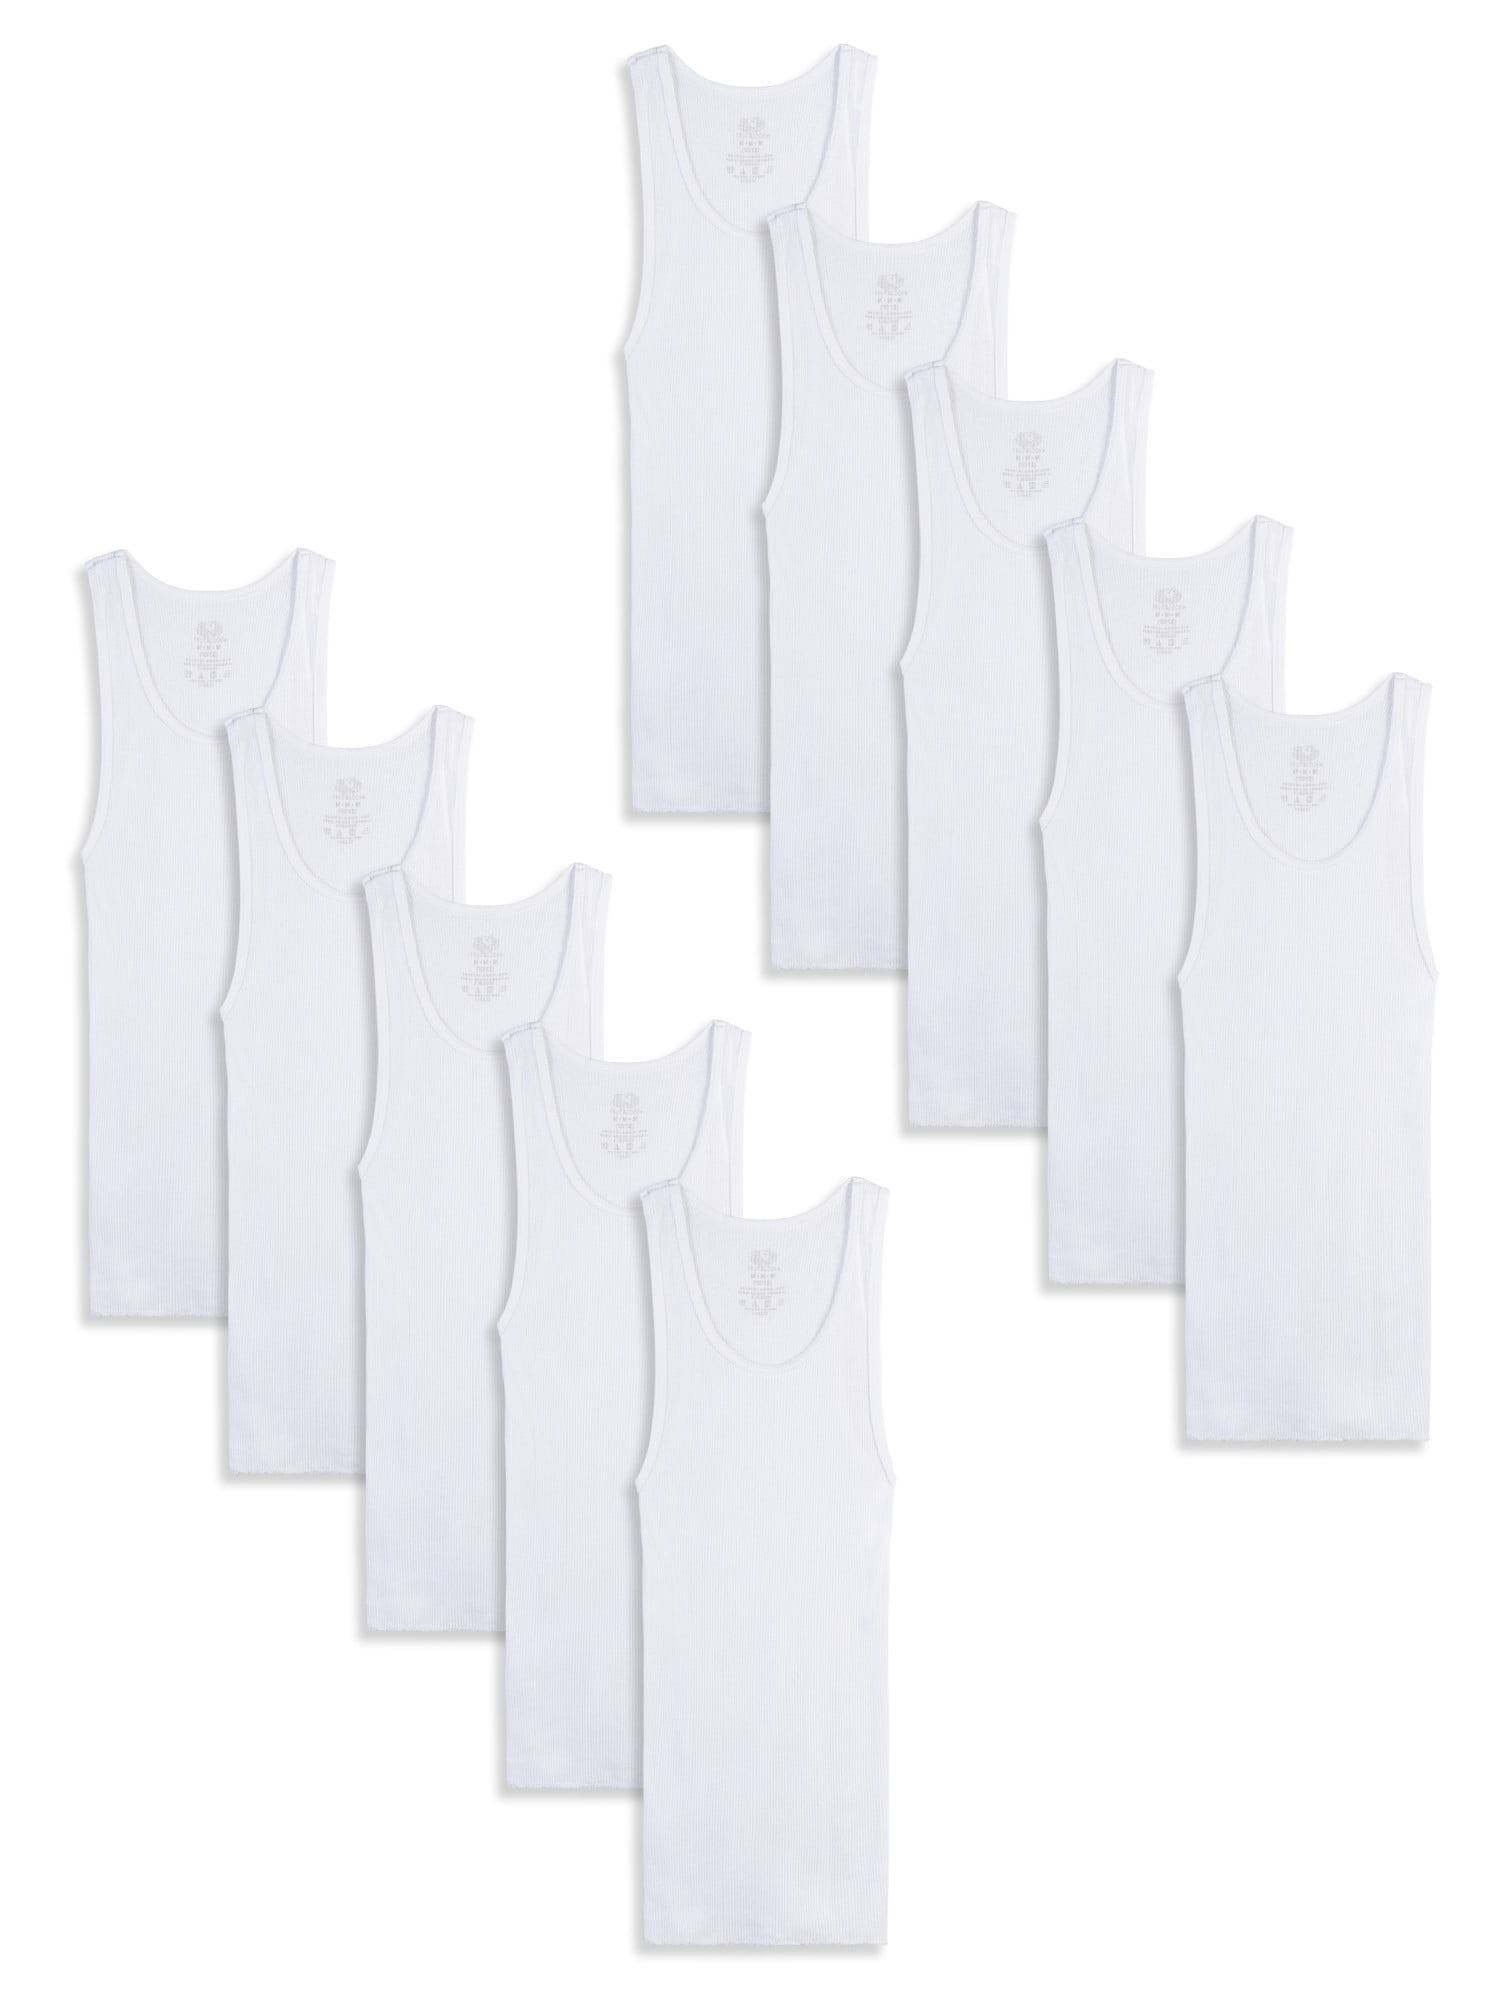 Hanes Boys Eco White Crew Undershirts, 10 Pack, Sizes S - XL 